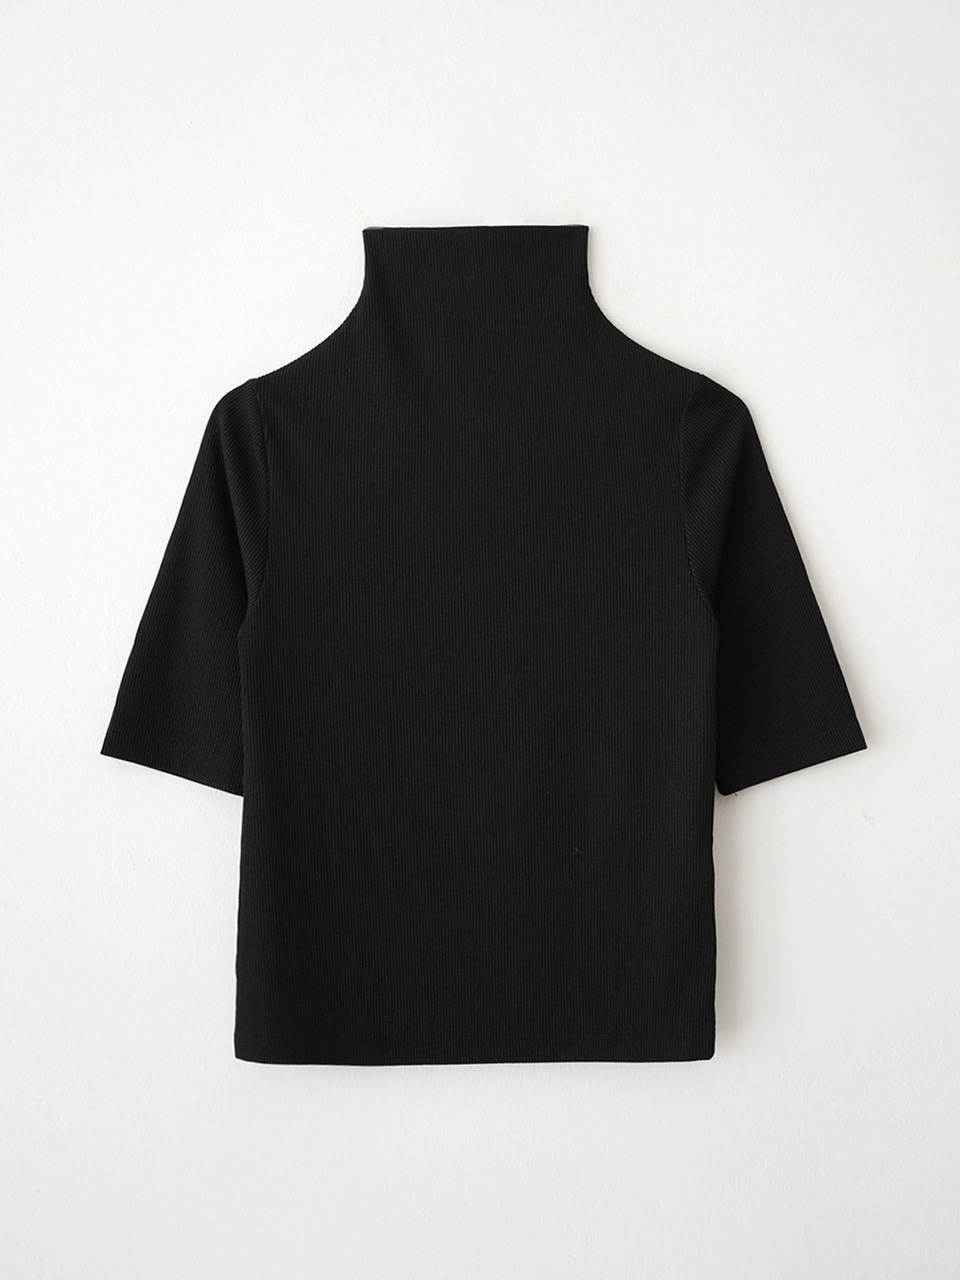 Half Ribbed Pola Neck T-Shirts (Black)